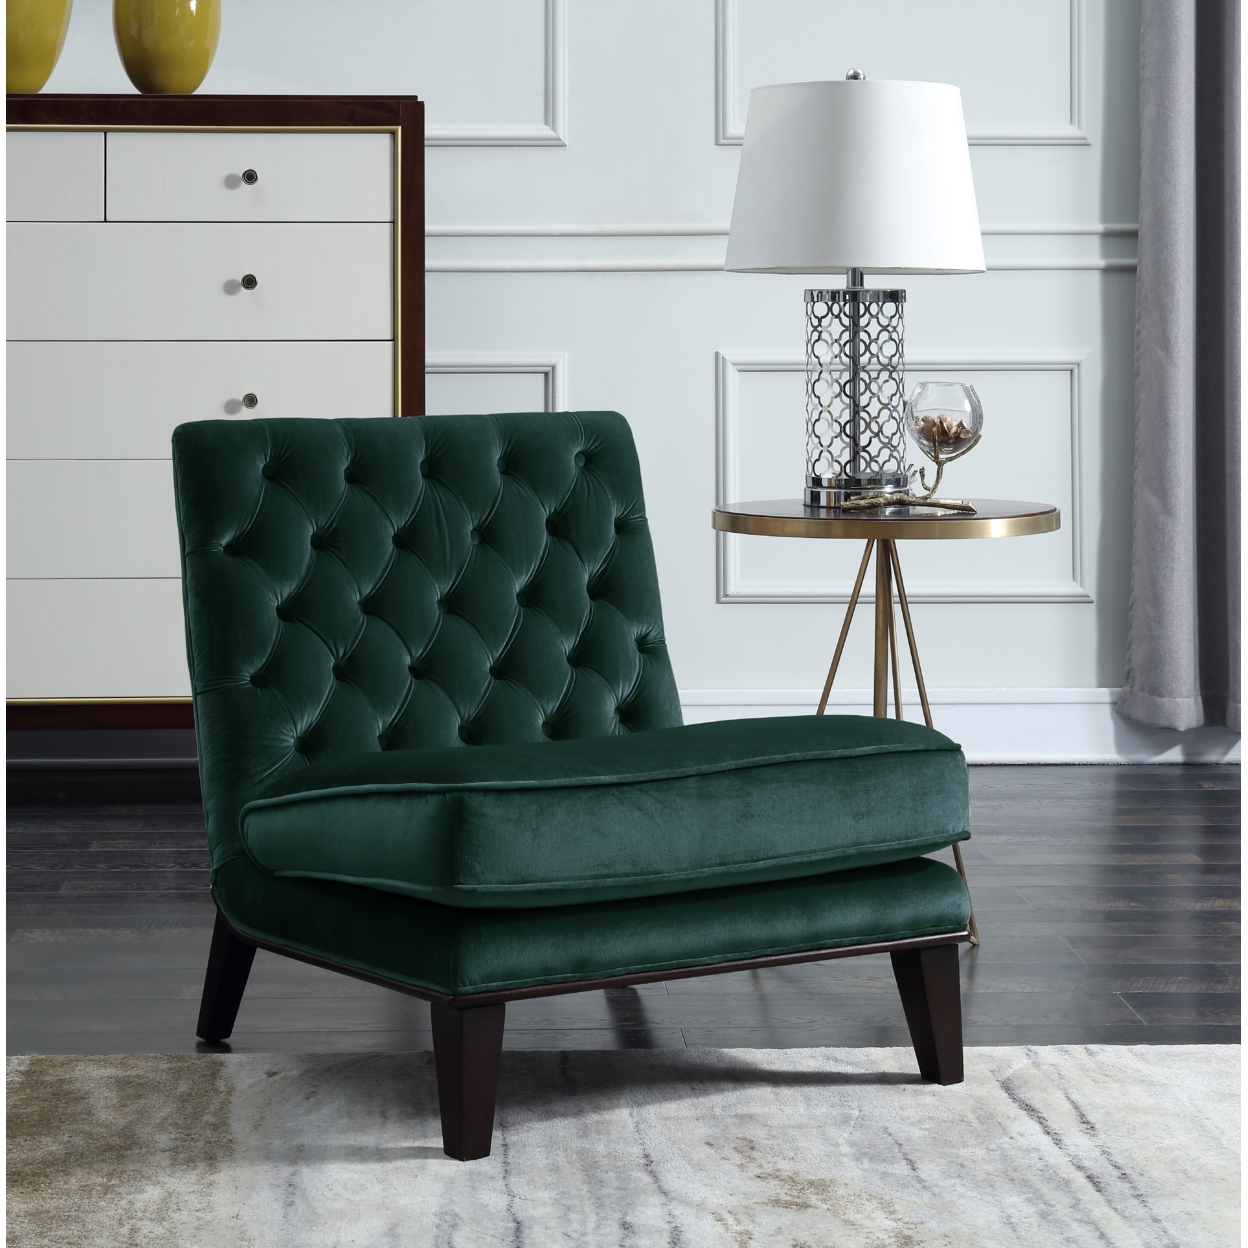 Priam Modern Neo Traditional Tufted Velvet Slipper Accent Chair - Green